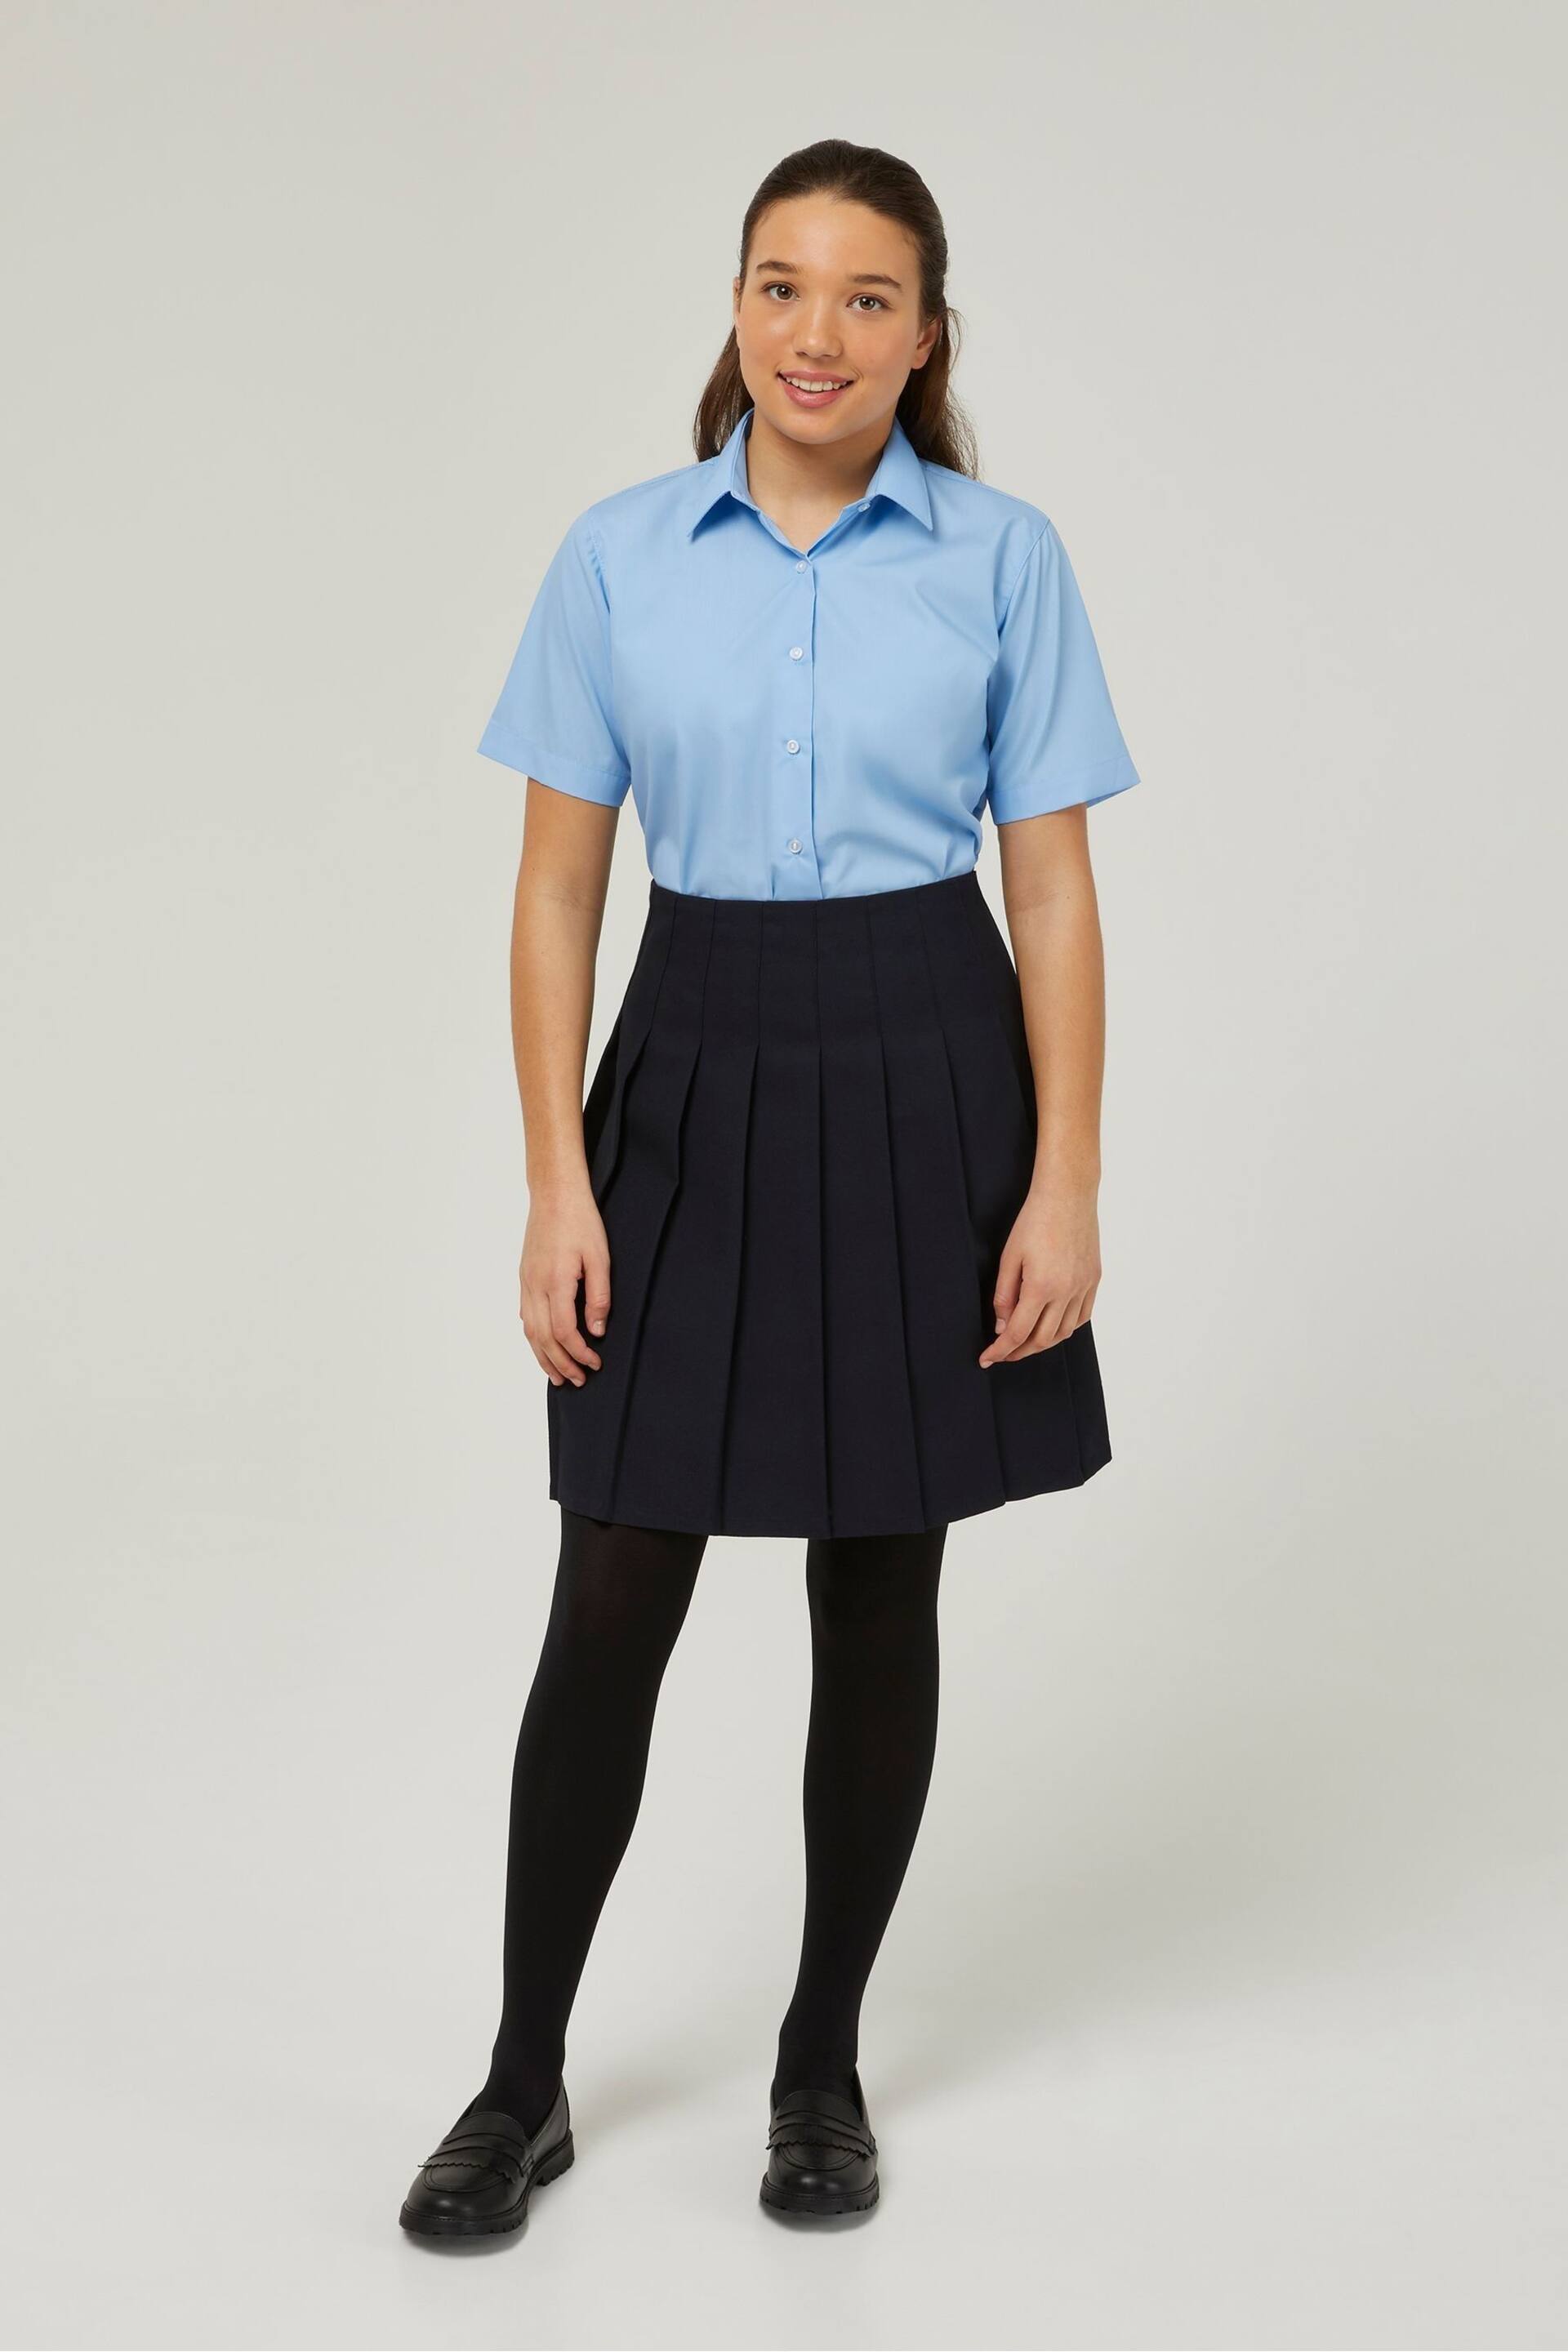 Trutex Blue Regular Fit Short Sleeve 2 Pack School Shirts - Image 3 of 6